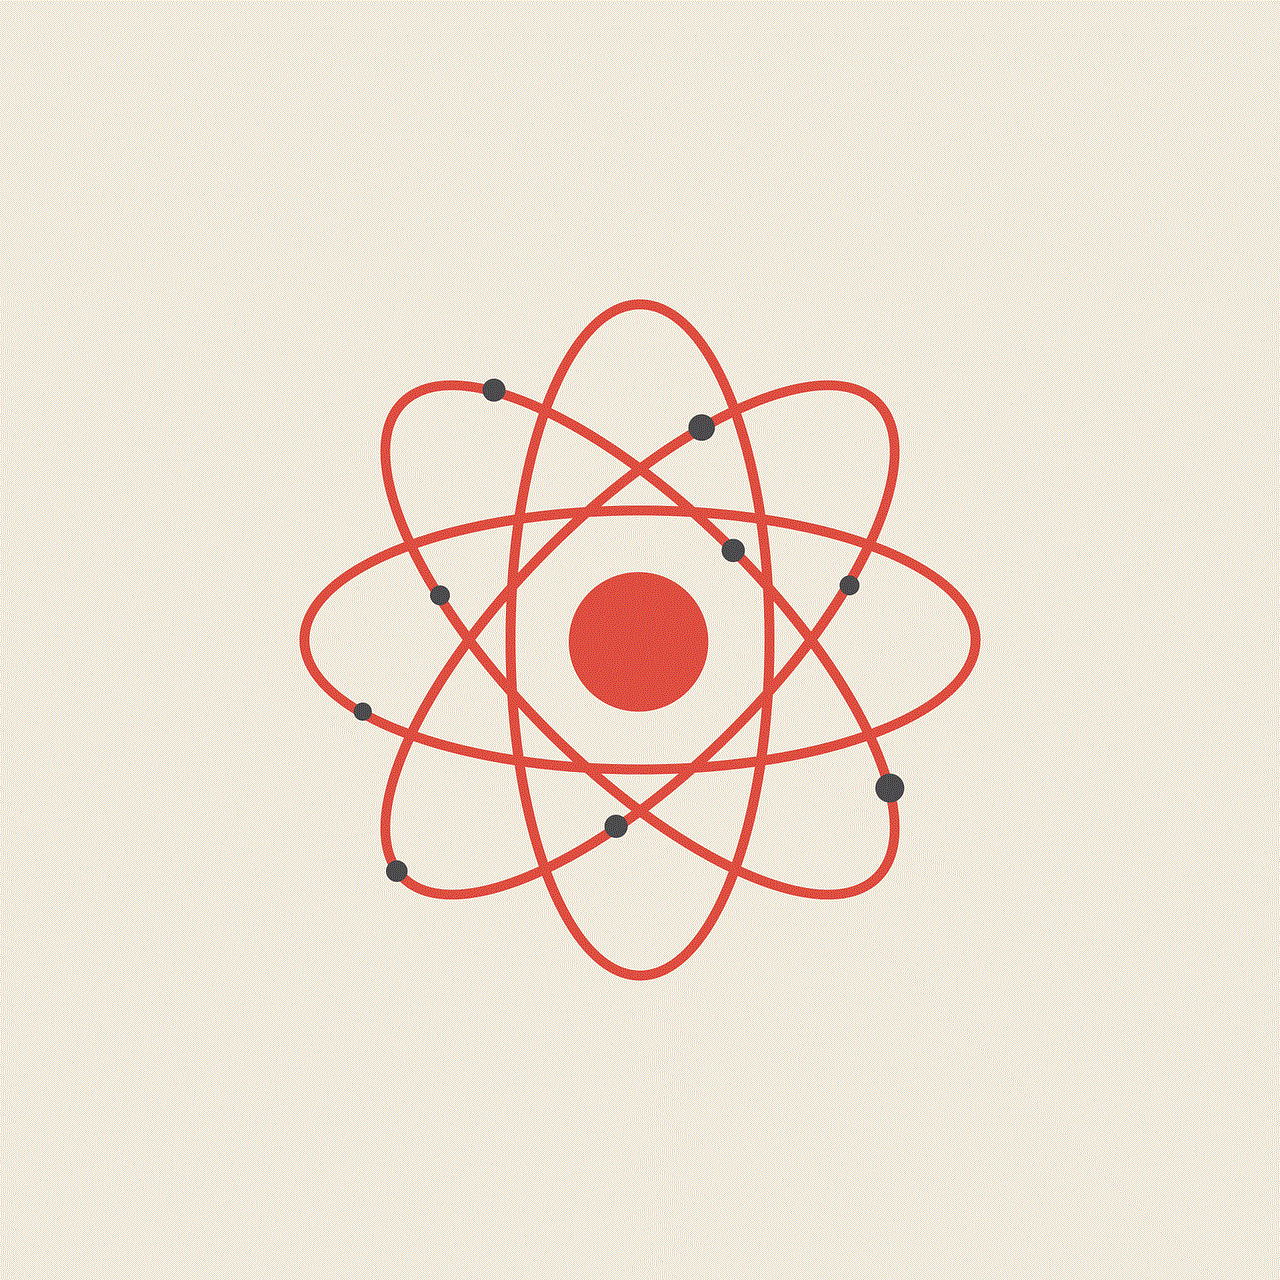 Atom Physics